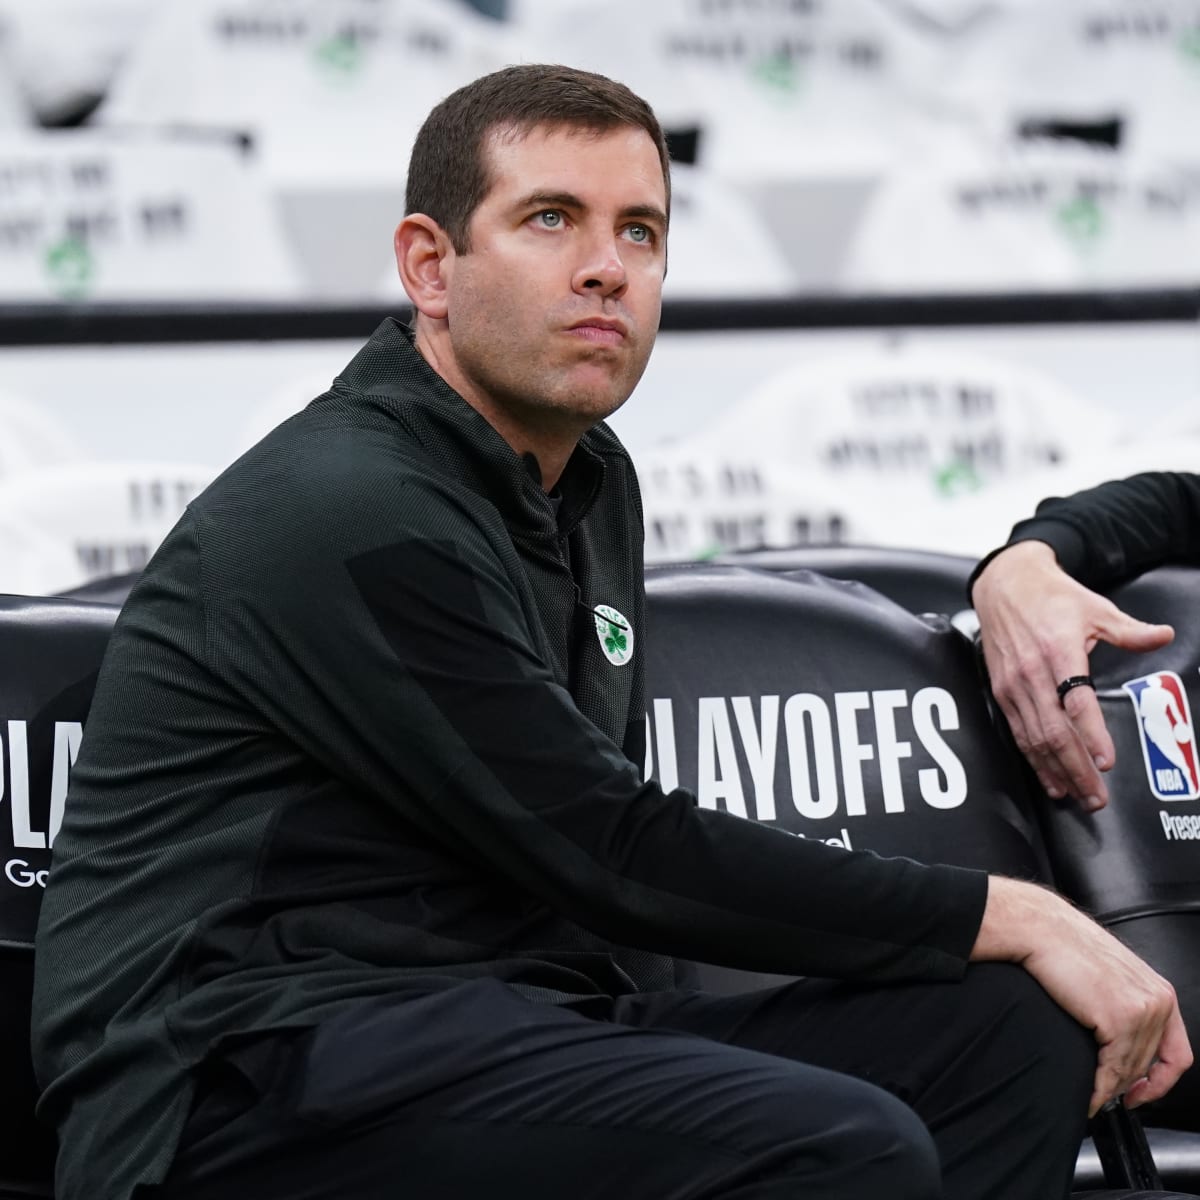 Mass. native Vonleh earns spot on Celtics roster, ESPN reports